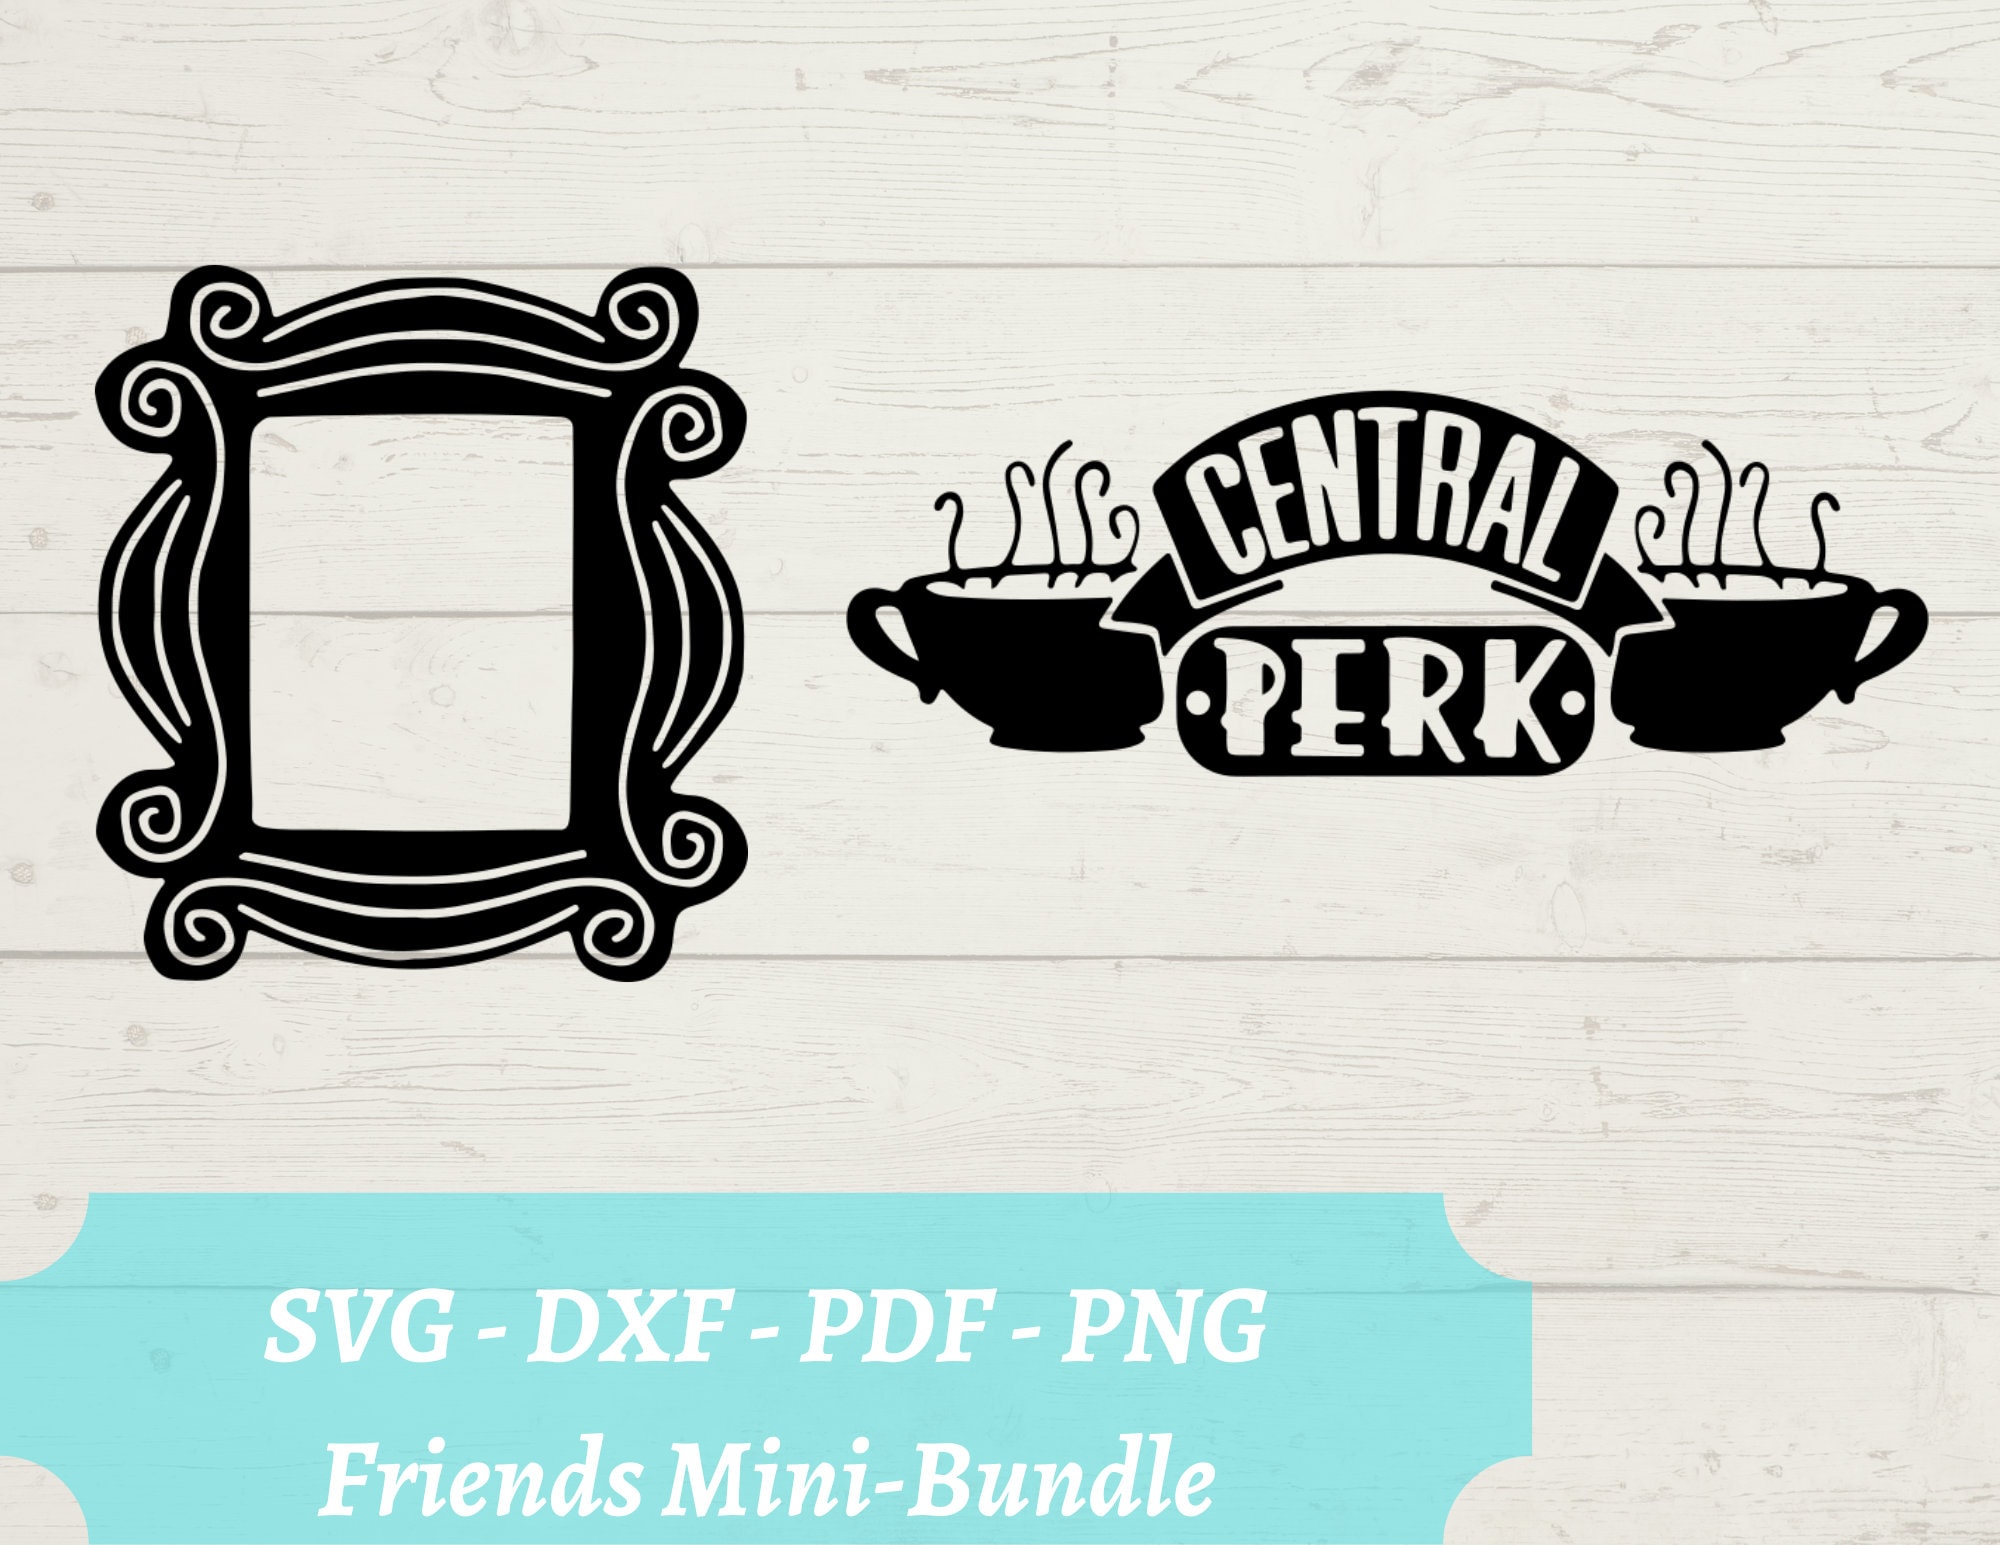 Friends: Desktop Central Perk (RP Minis)